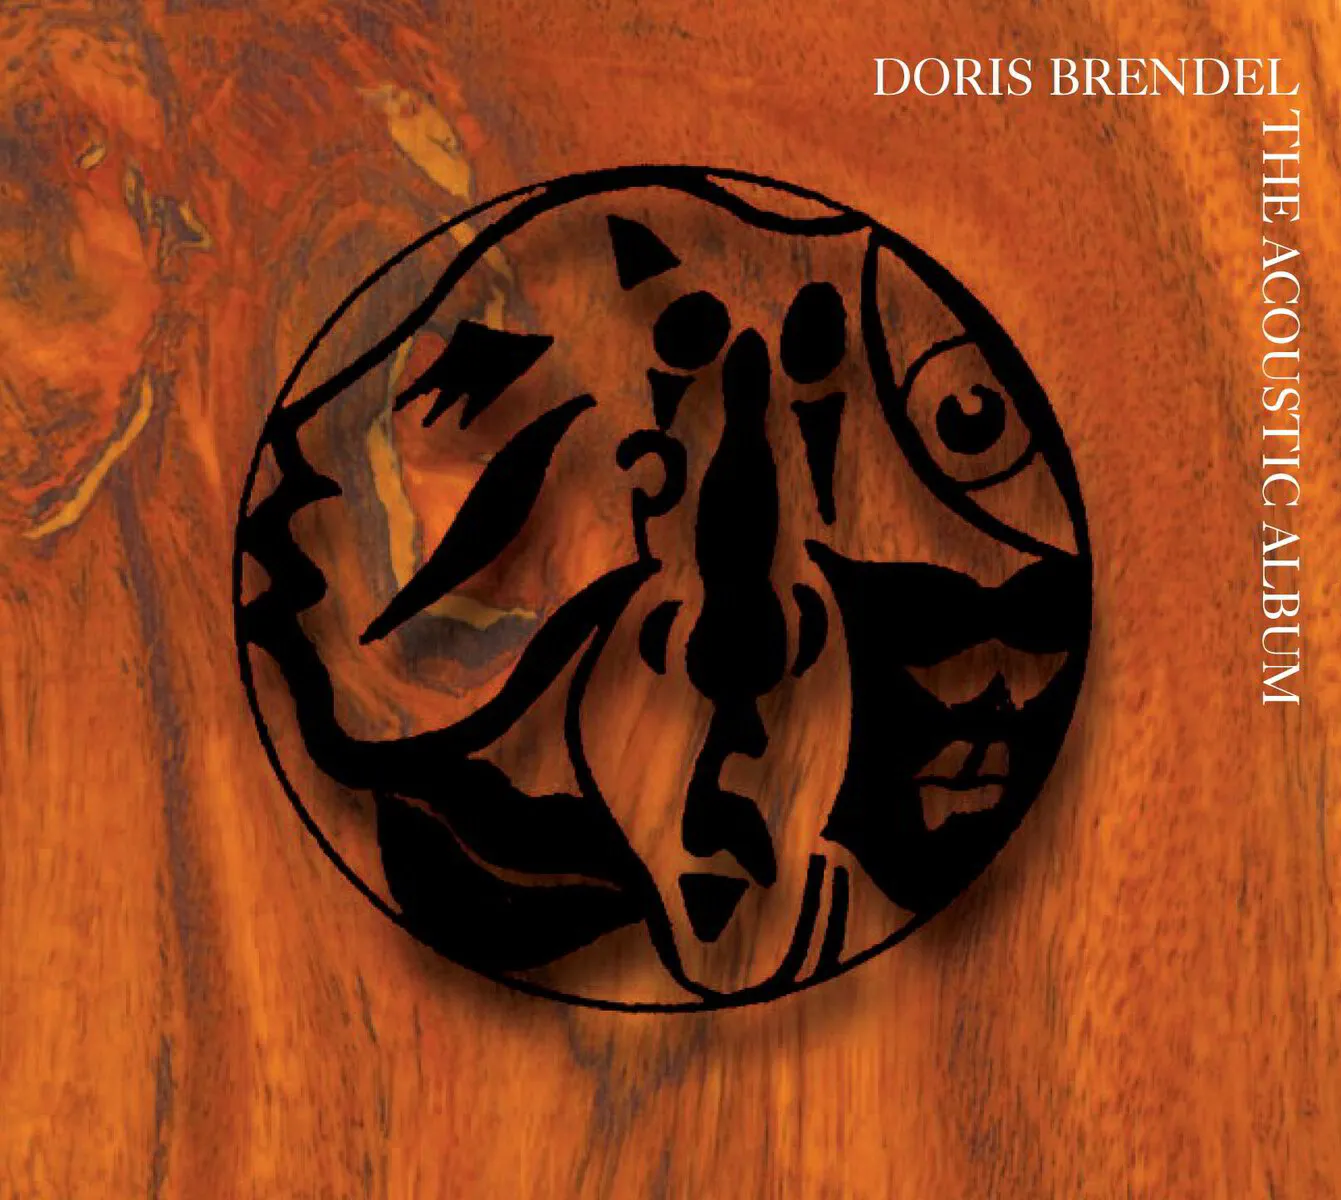 The Acoustic Album - Doris Brendel - CD